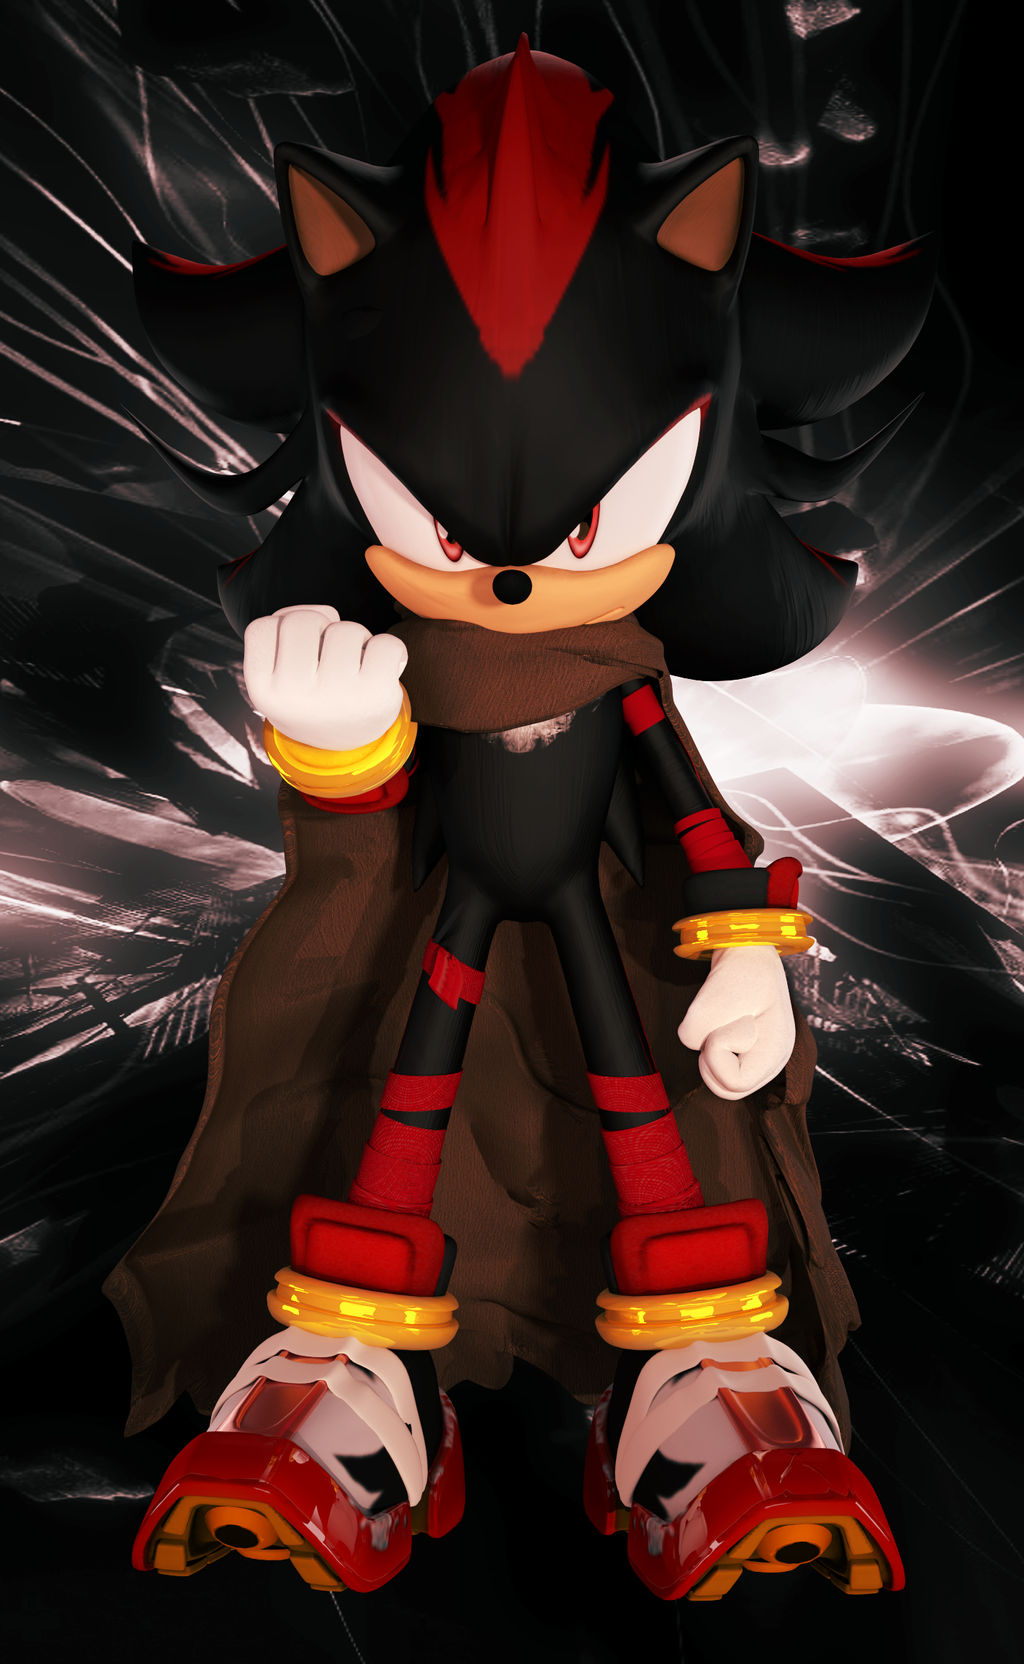 Shadow Sonic Boom Style Version 2 by Silverdahedgehog06 on DeviantArt